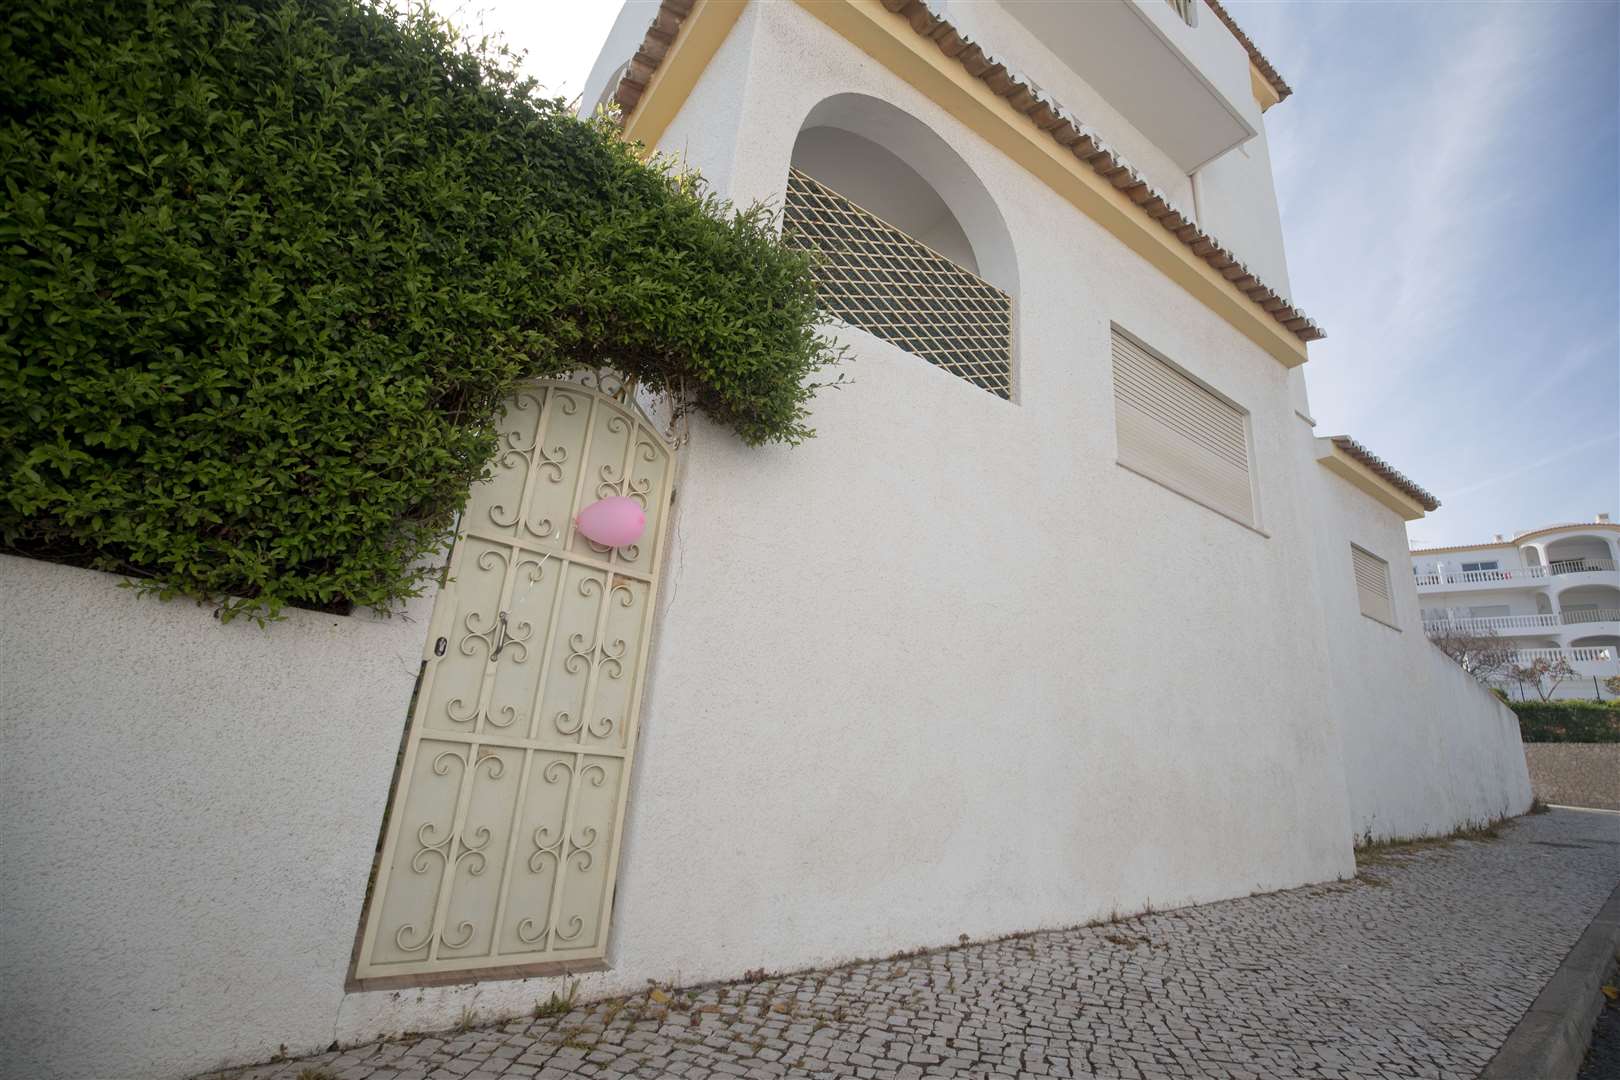 A pink balloon outside apartment 5A on Rua Dr Agostinho da Silva in Praia Da Luz, Portugal, where Madeline McCann went missing in 2007 (Steve Parsons/PA)